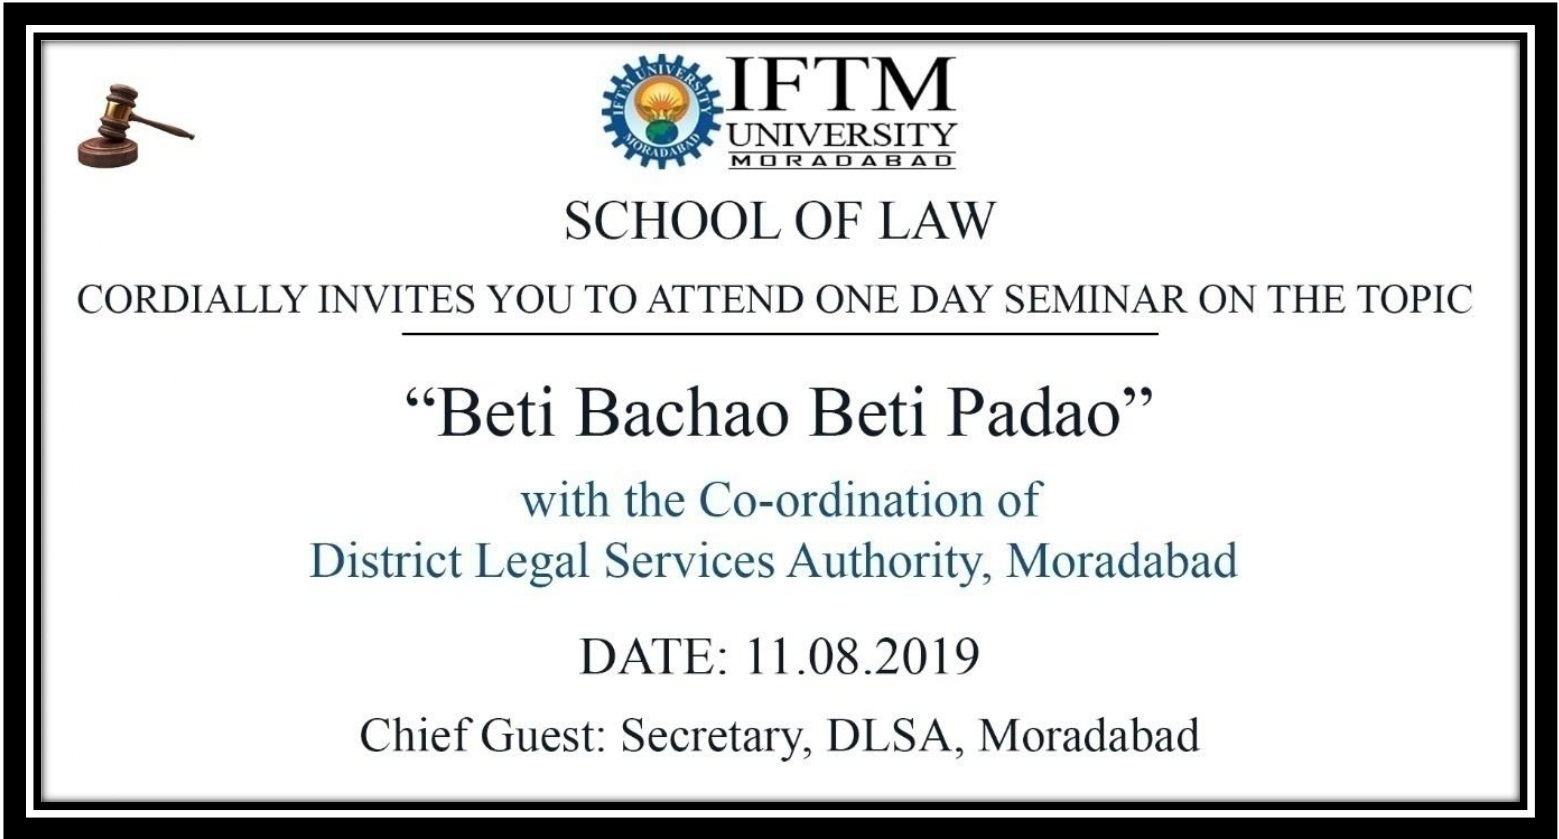 One day seminar on Beti Bachao, Beti Padao